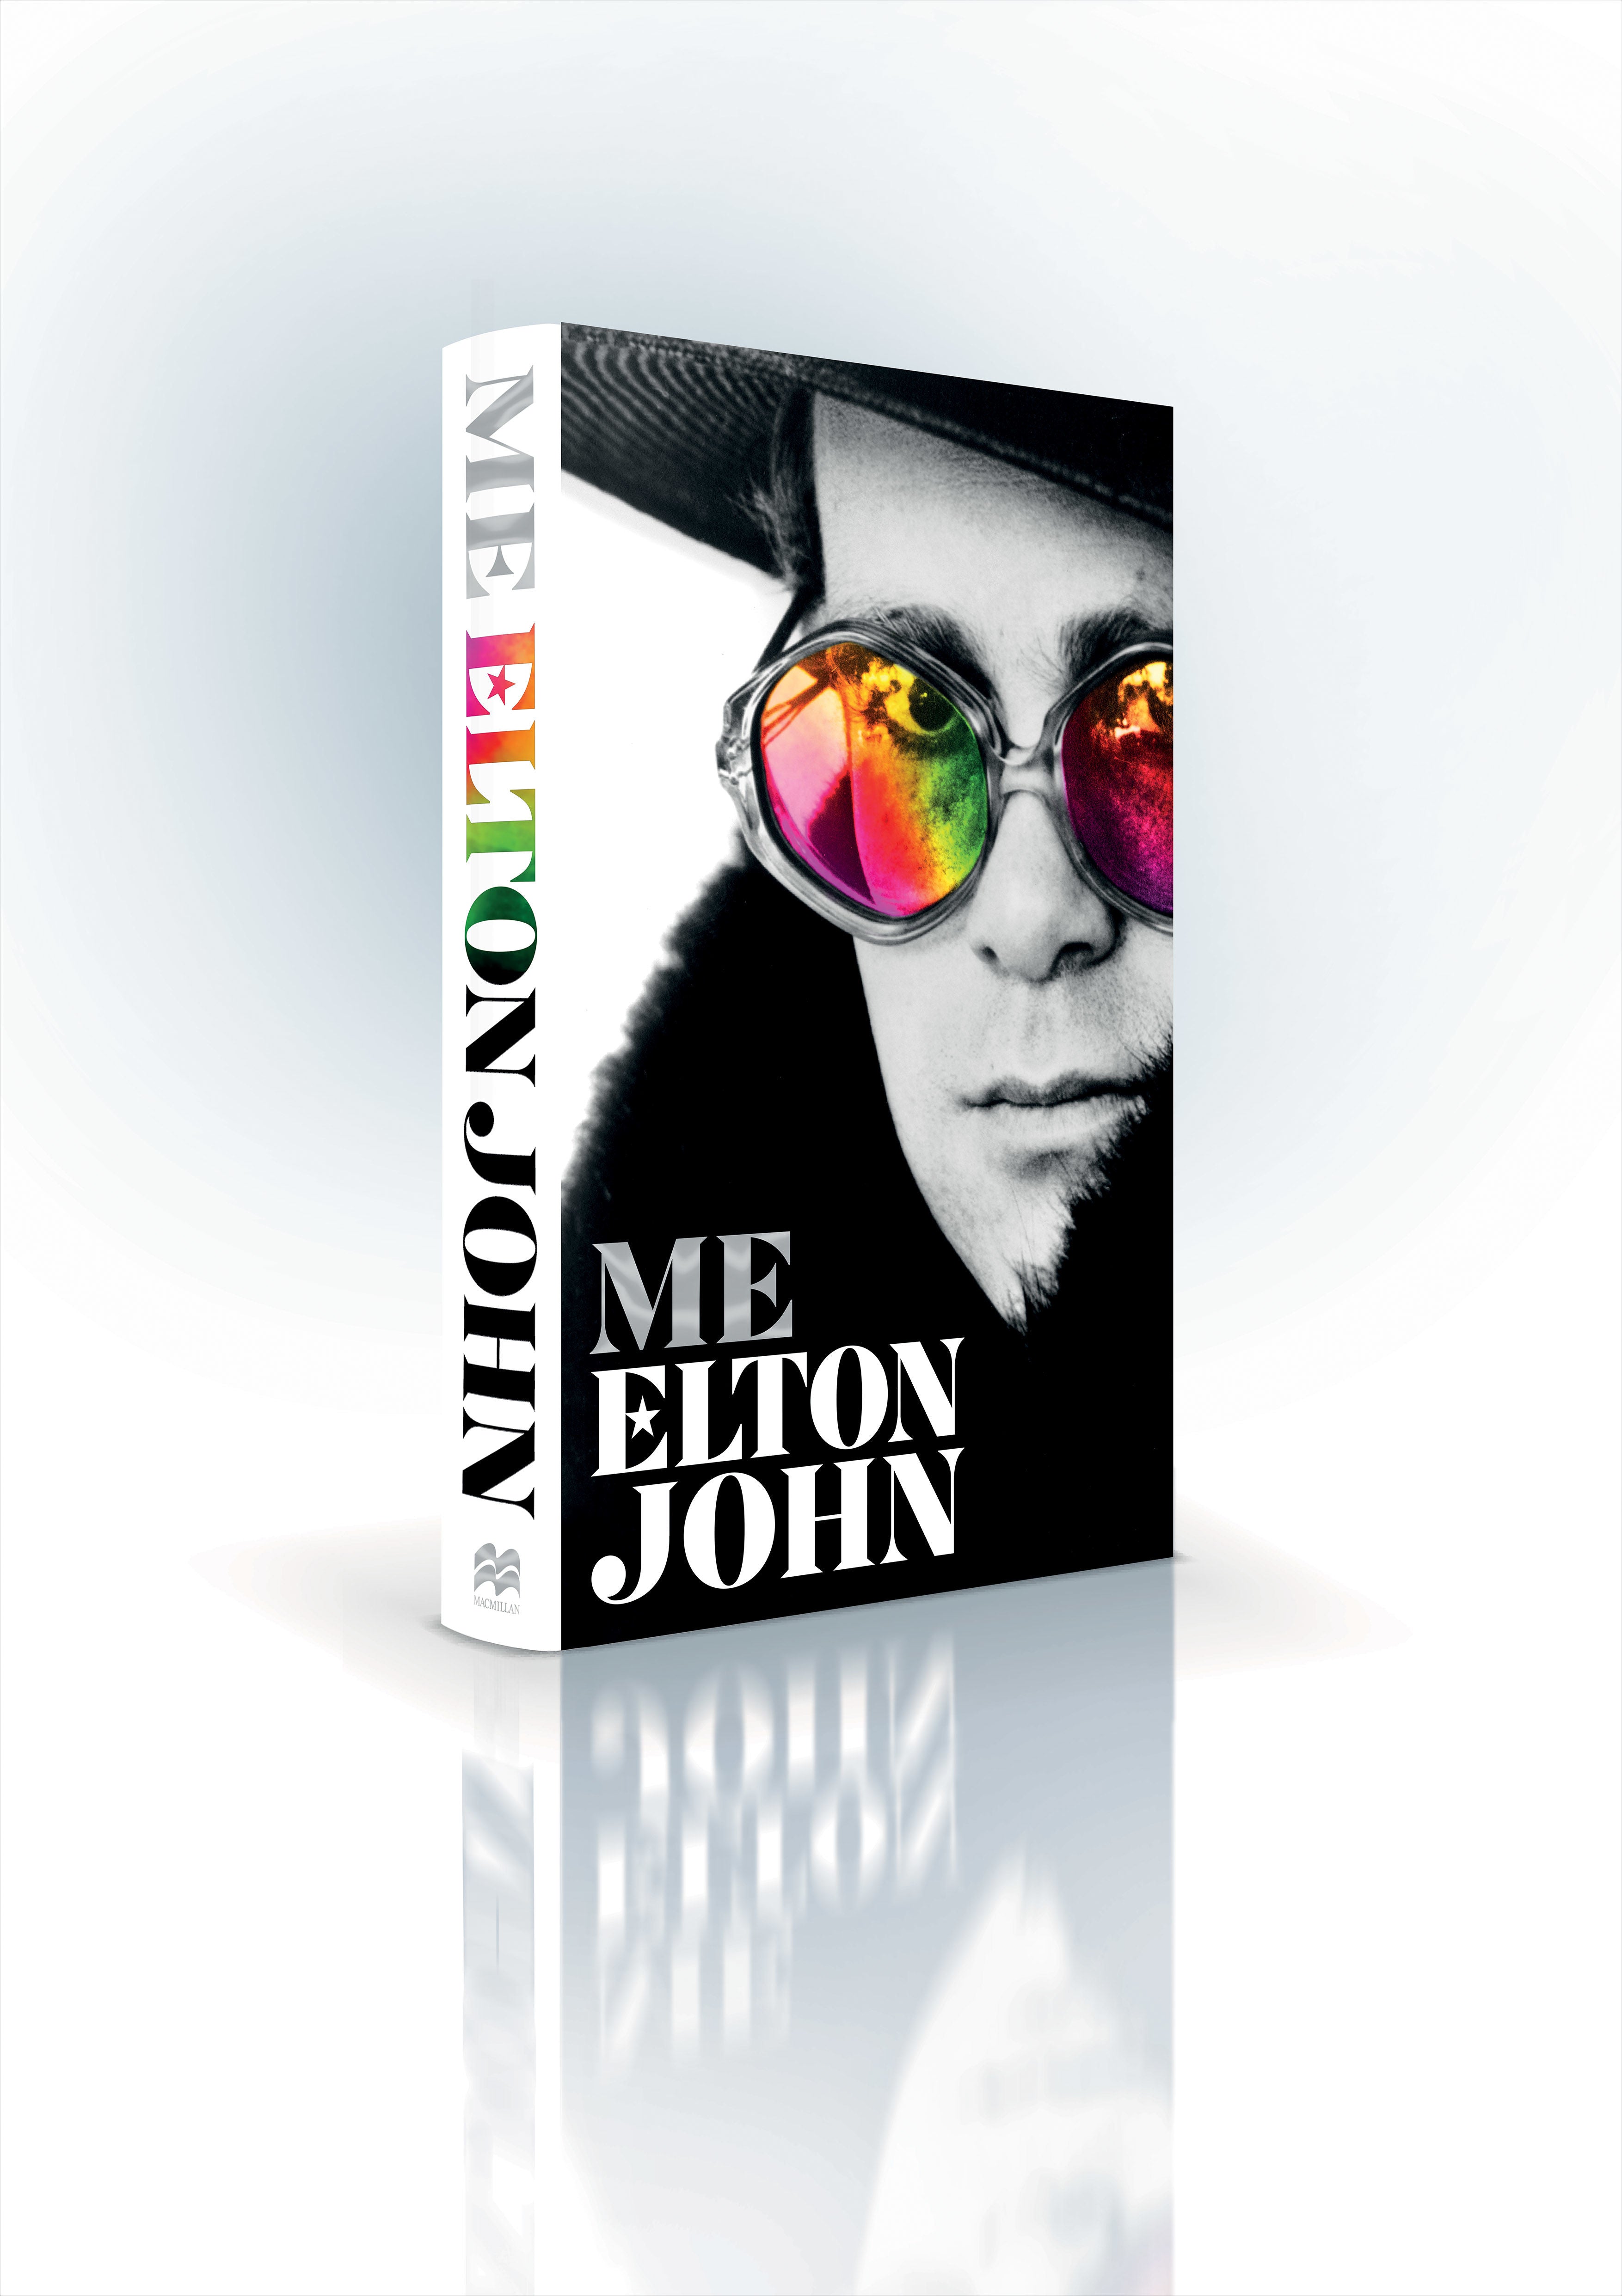 Elton John - Me by Elton John 